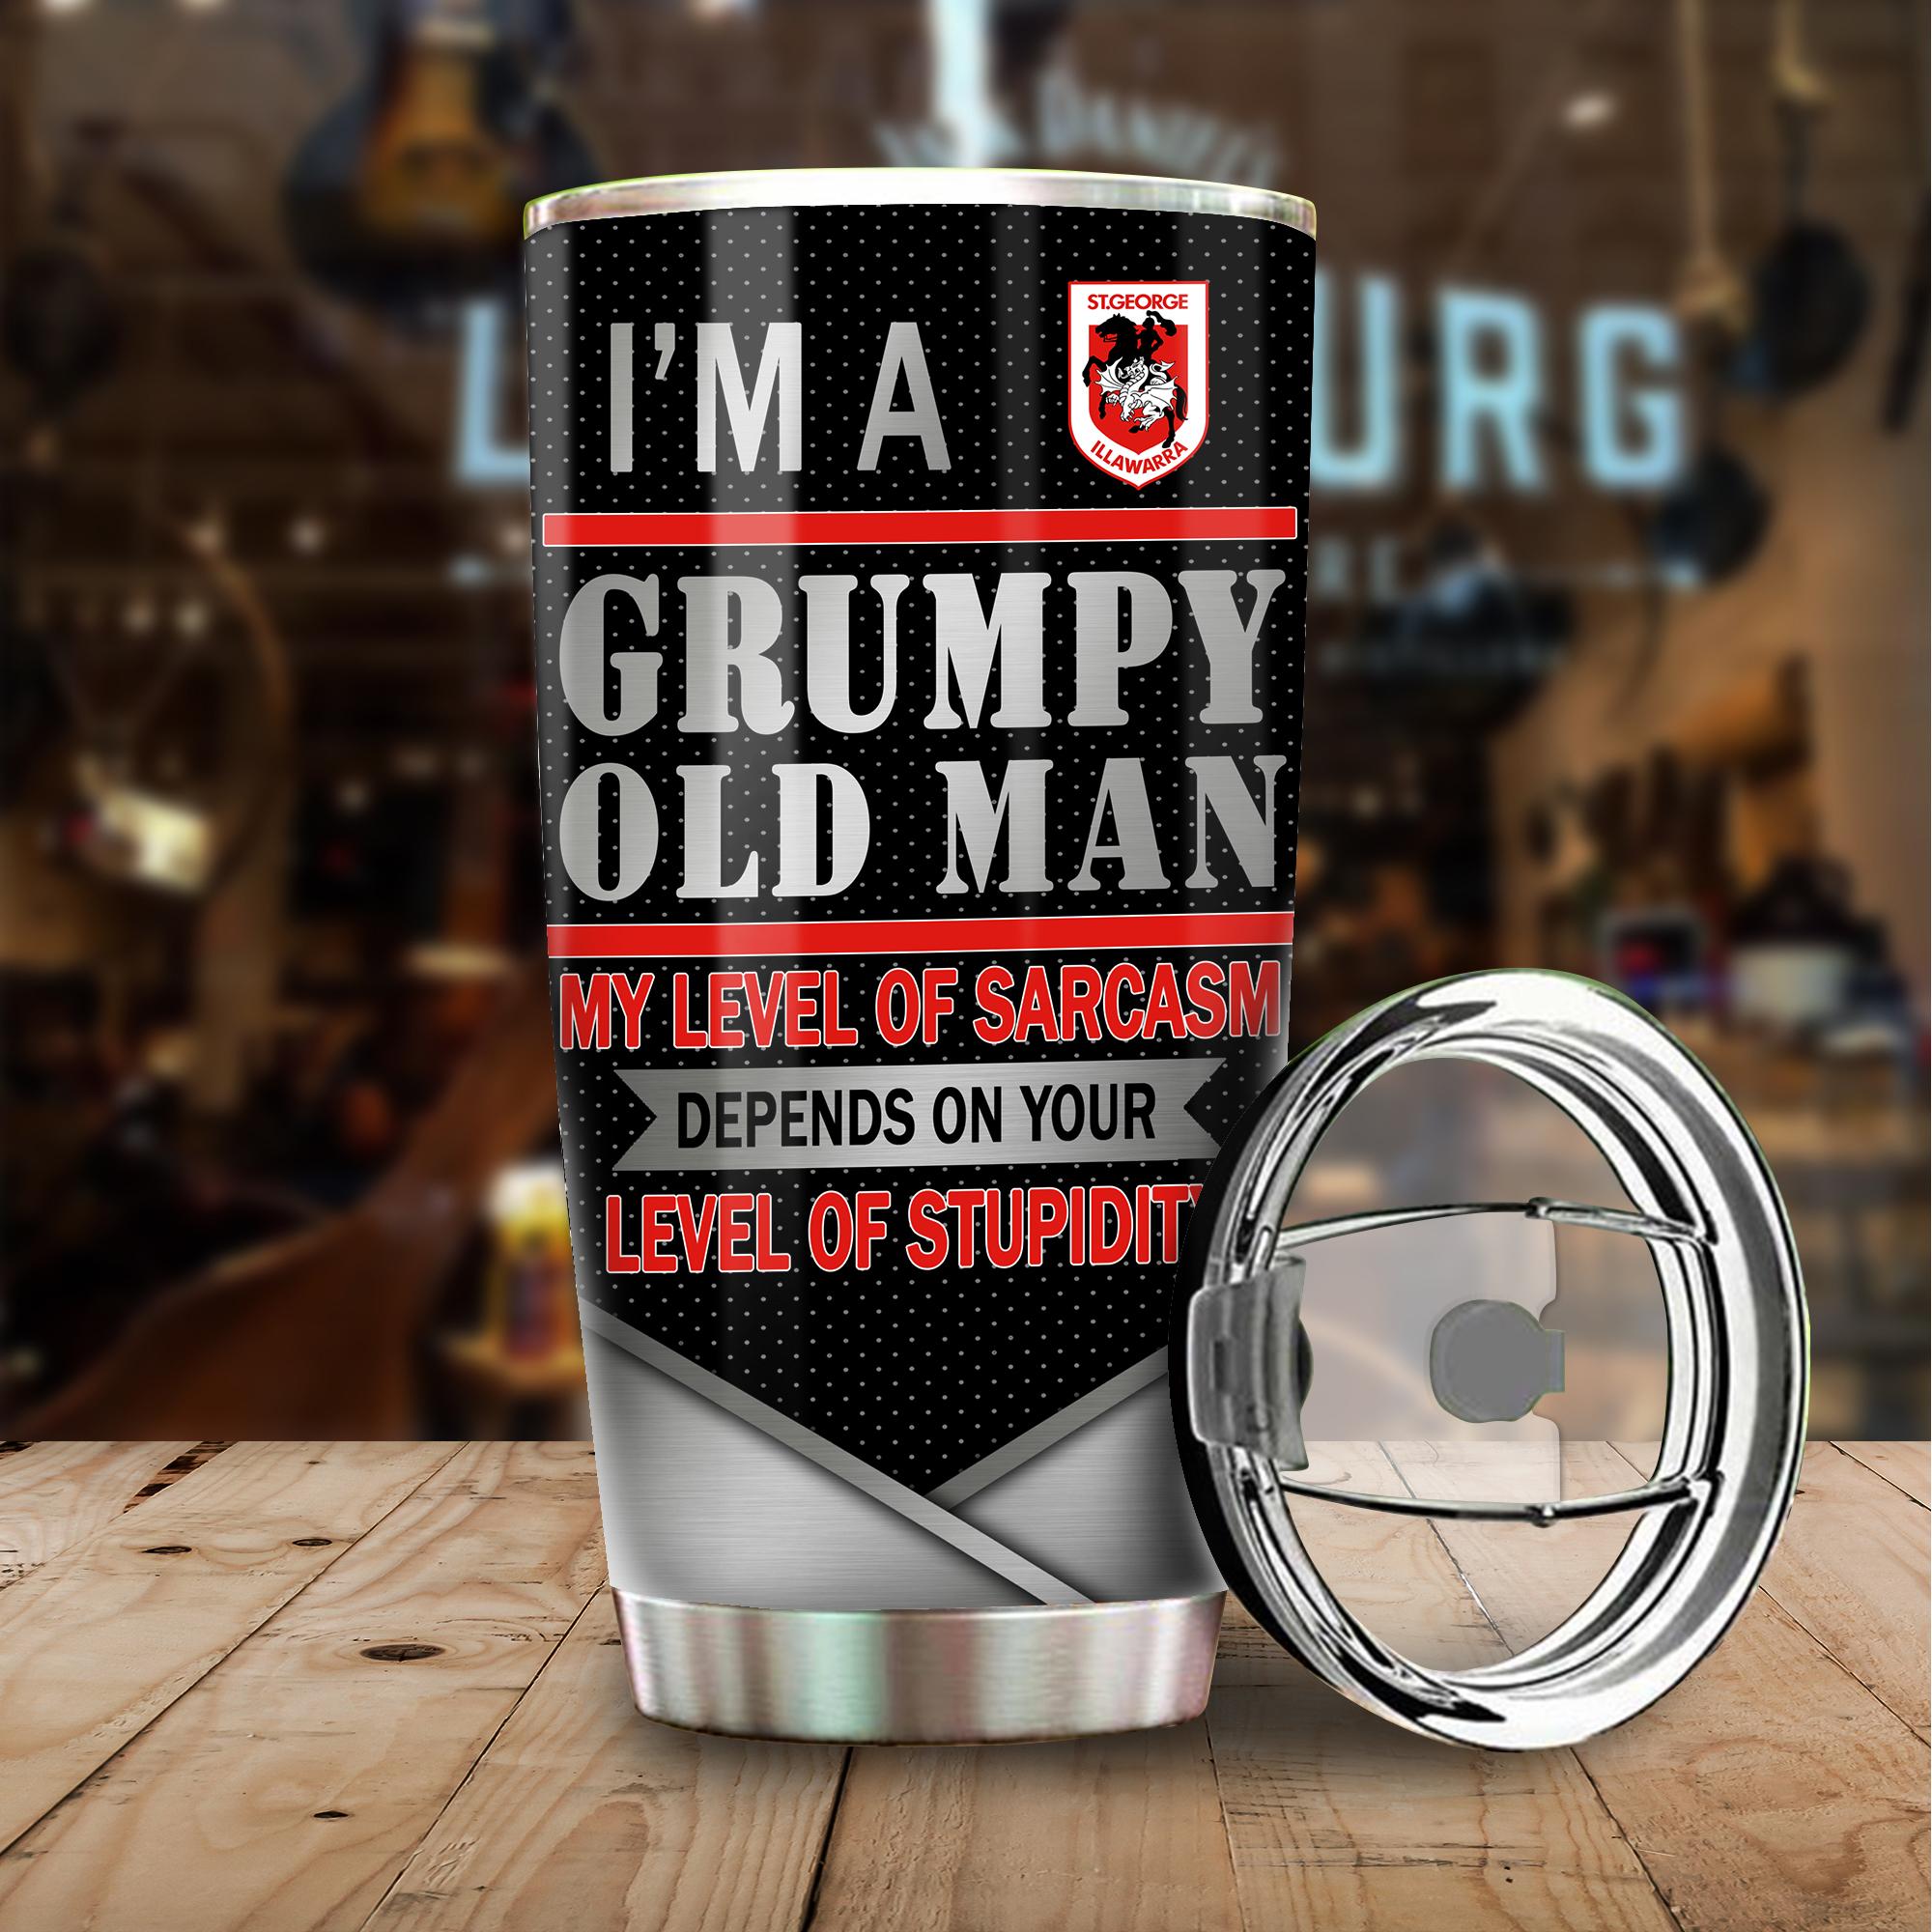 St. George Illawarra Dragons I’m A Grumpy Old Man Custom Name Tumbler Cup